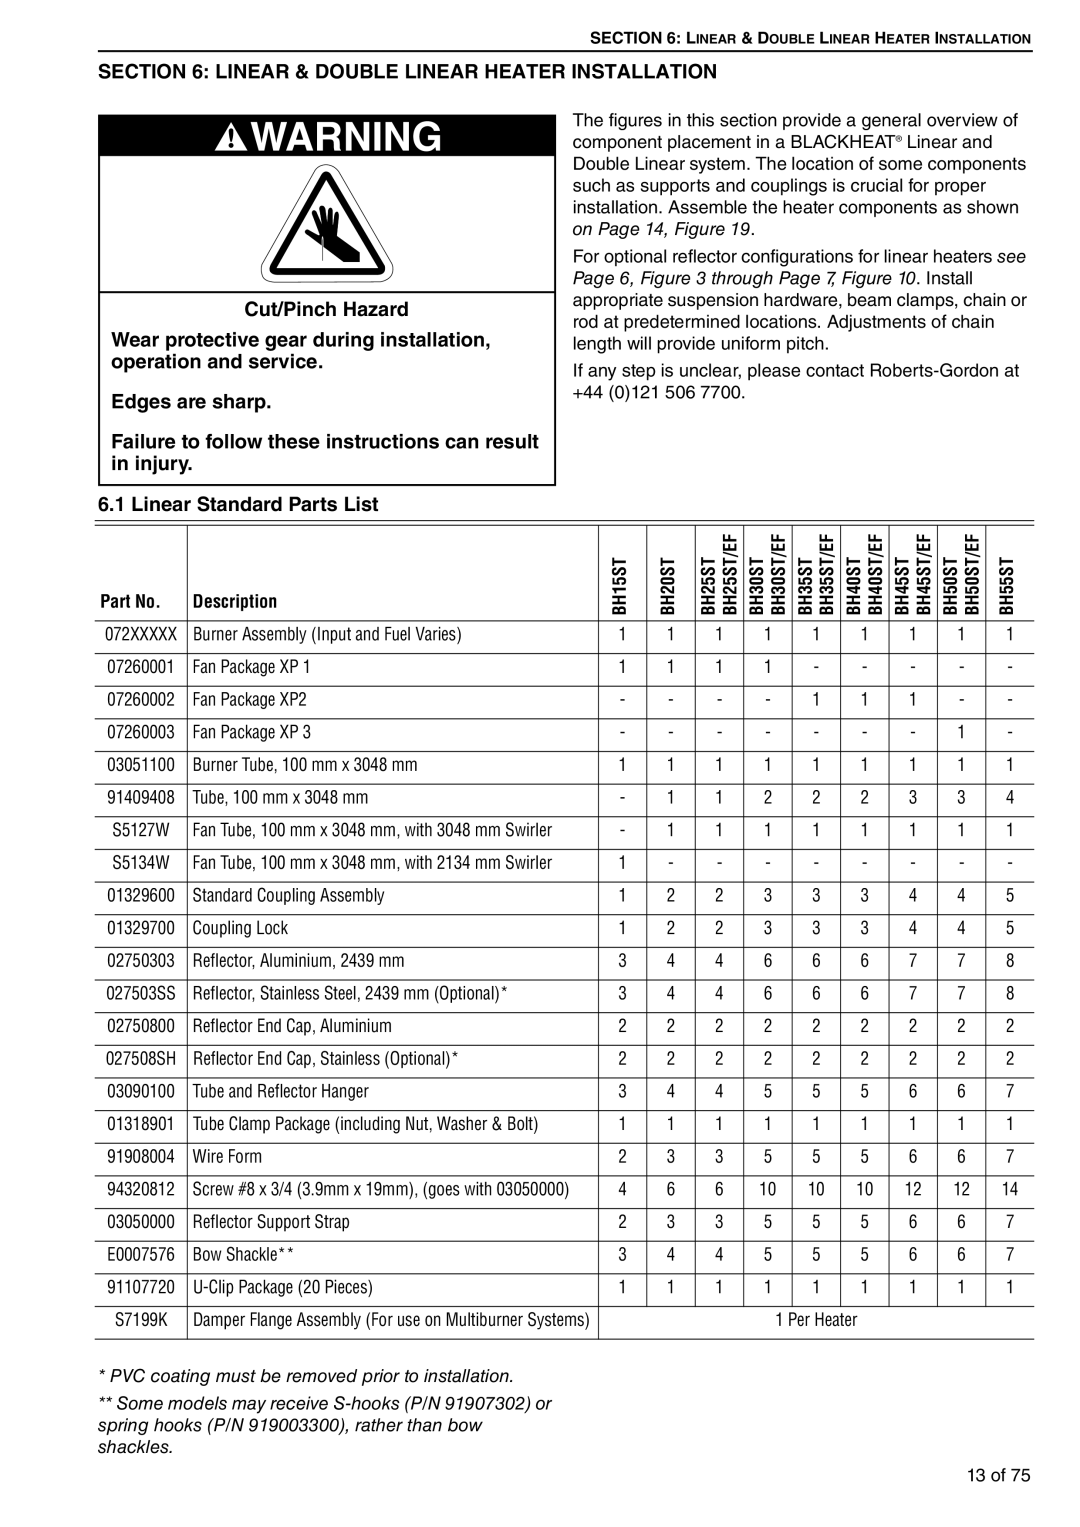 Roberts Gorden BH45ST/EF Linear Standard Parts List, Cut/Pinch Hazard, Edges are sharp, Part No, Description, BH15ST 